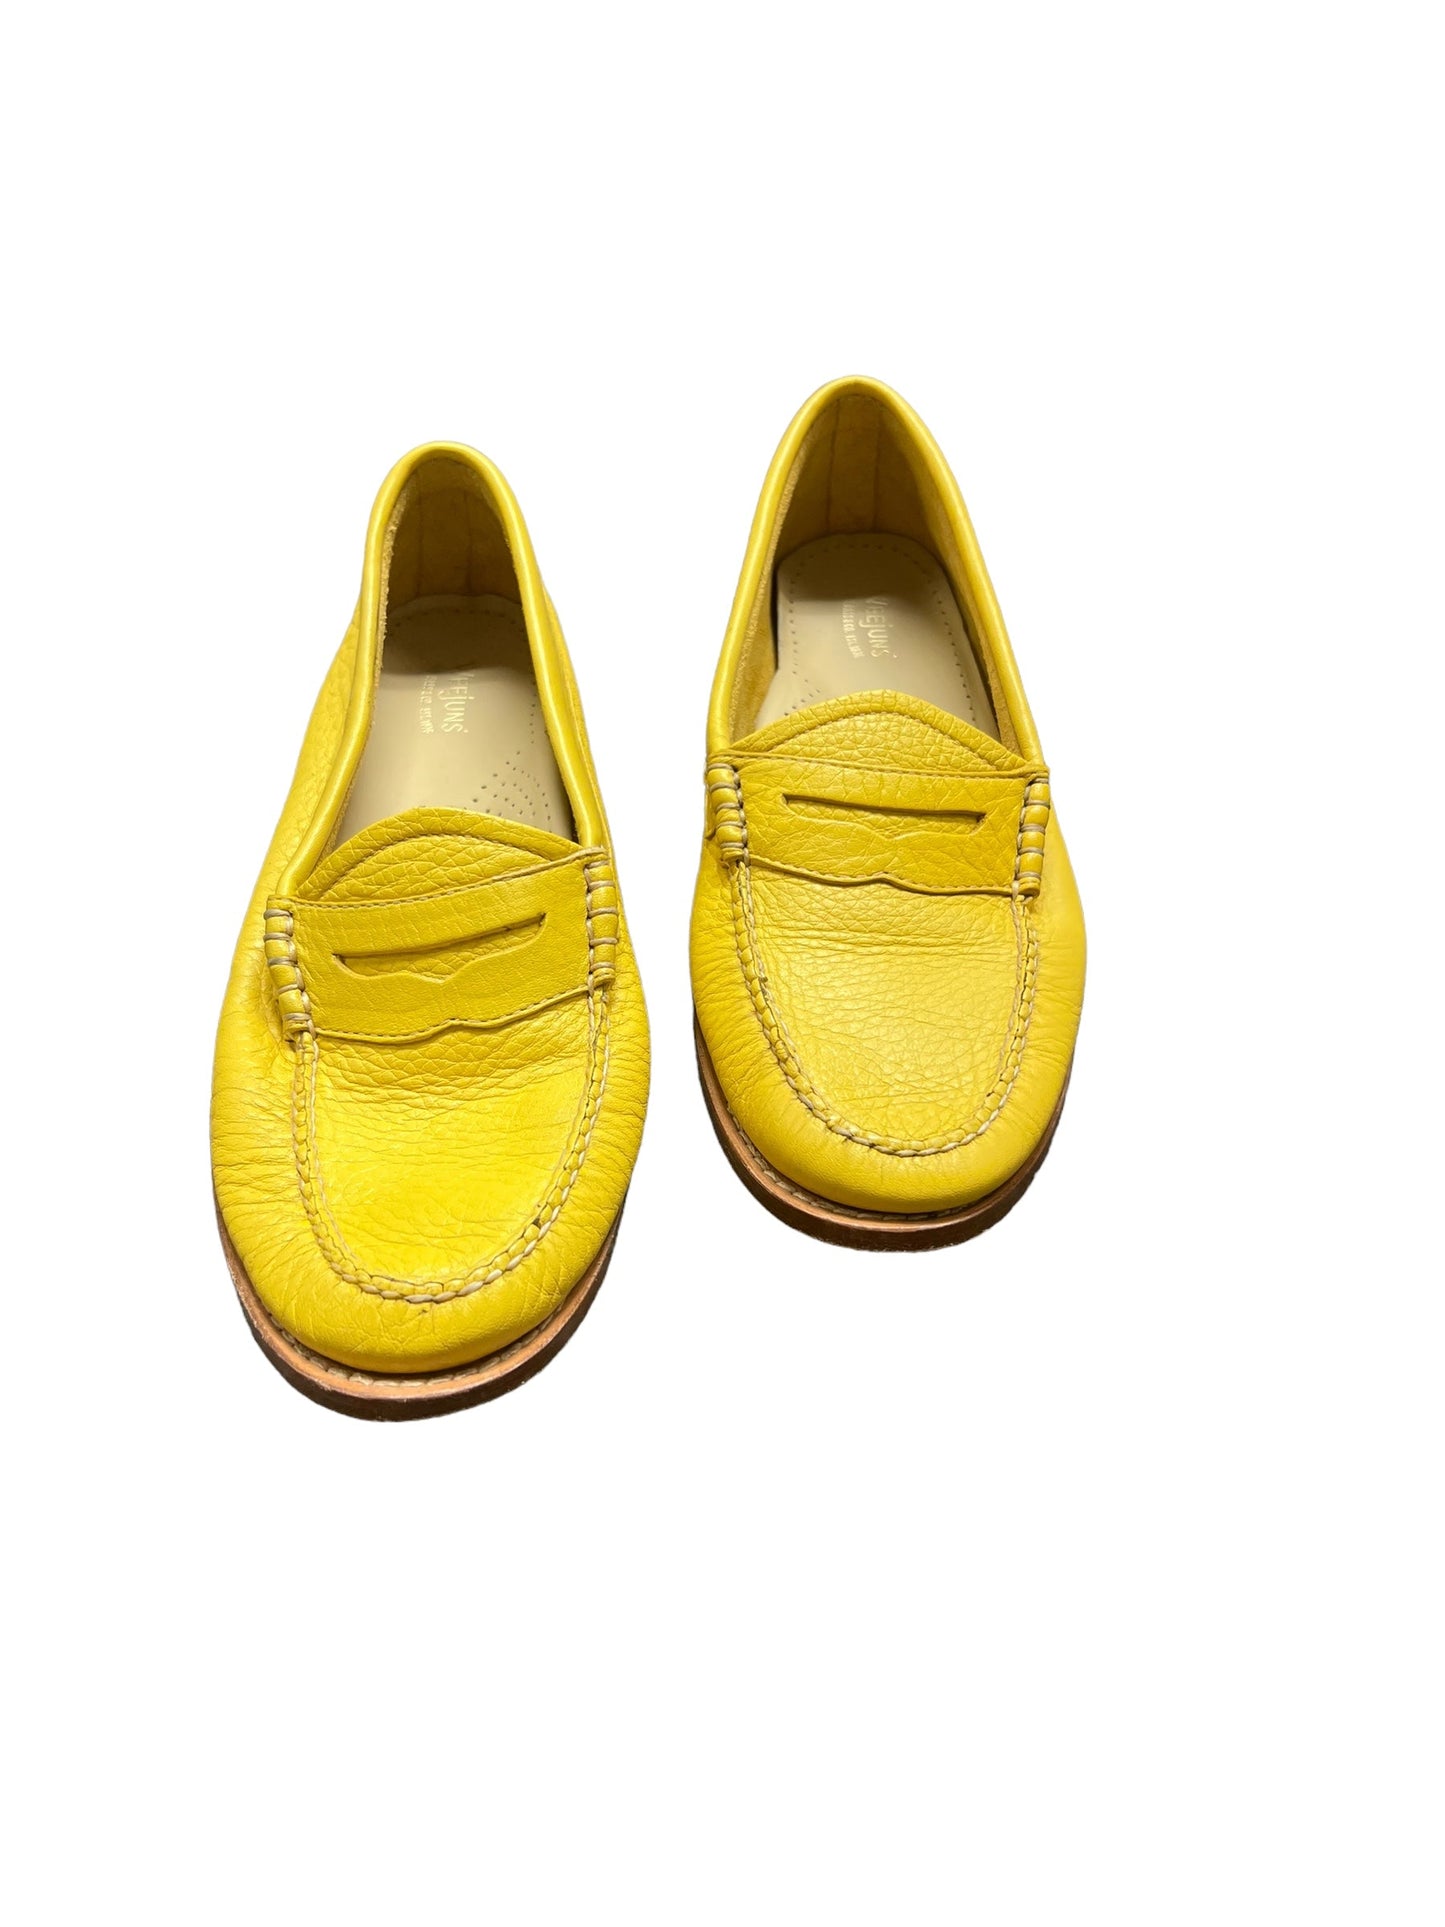 Yellow Shoes Flats Cma, Size 9